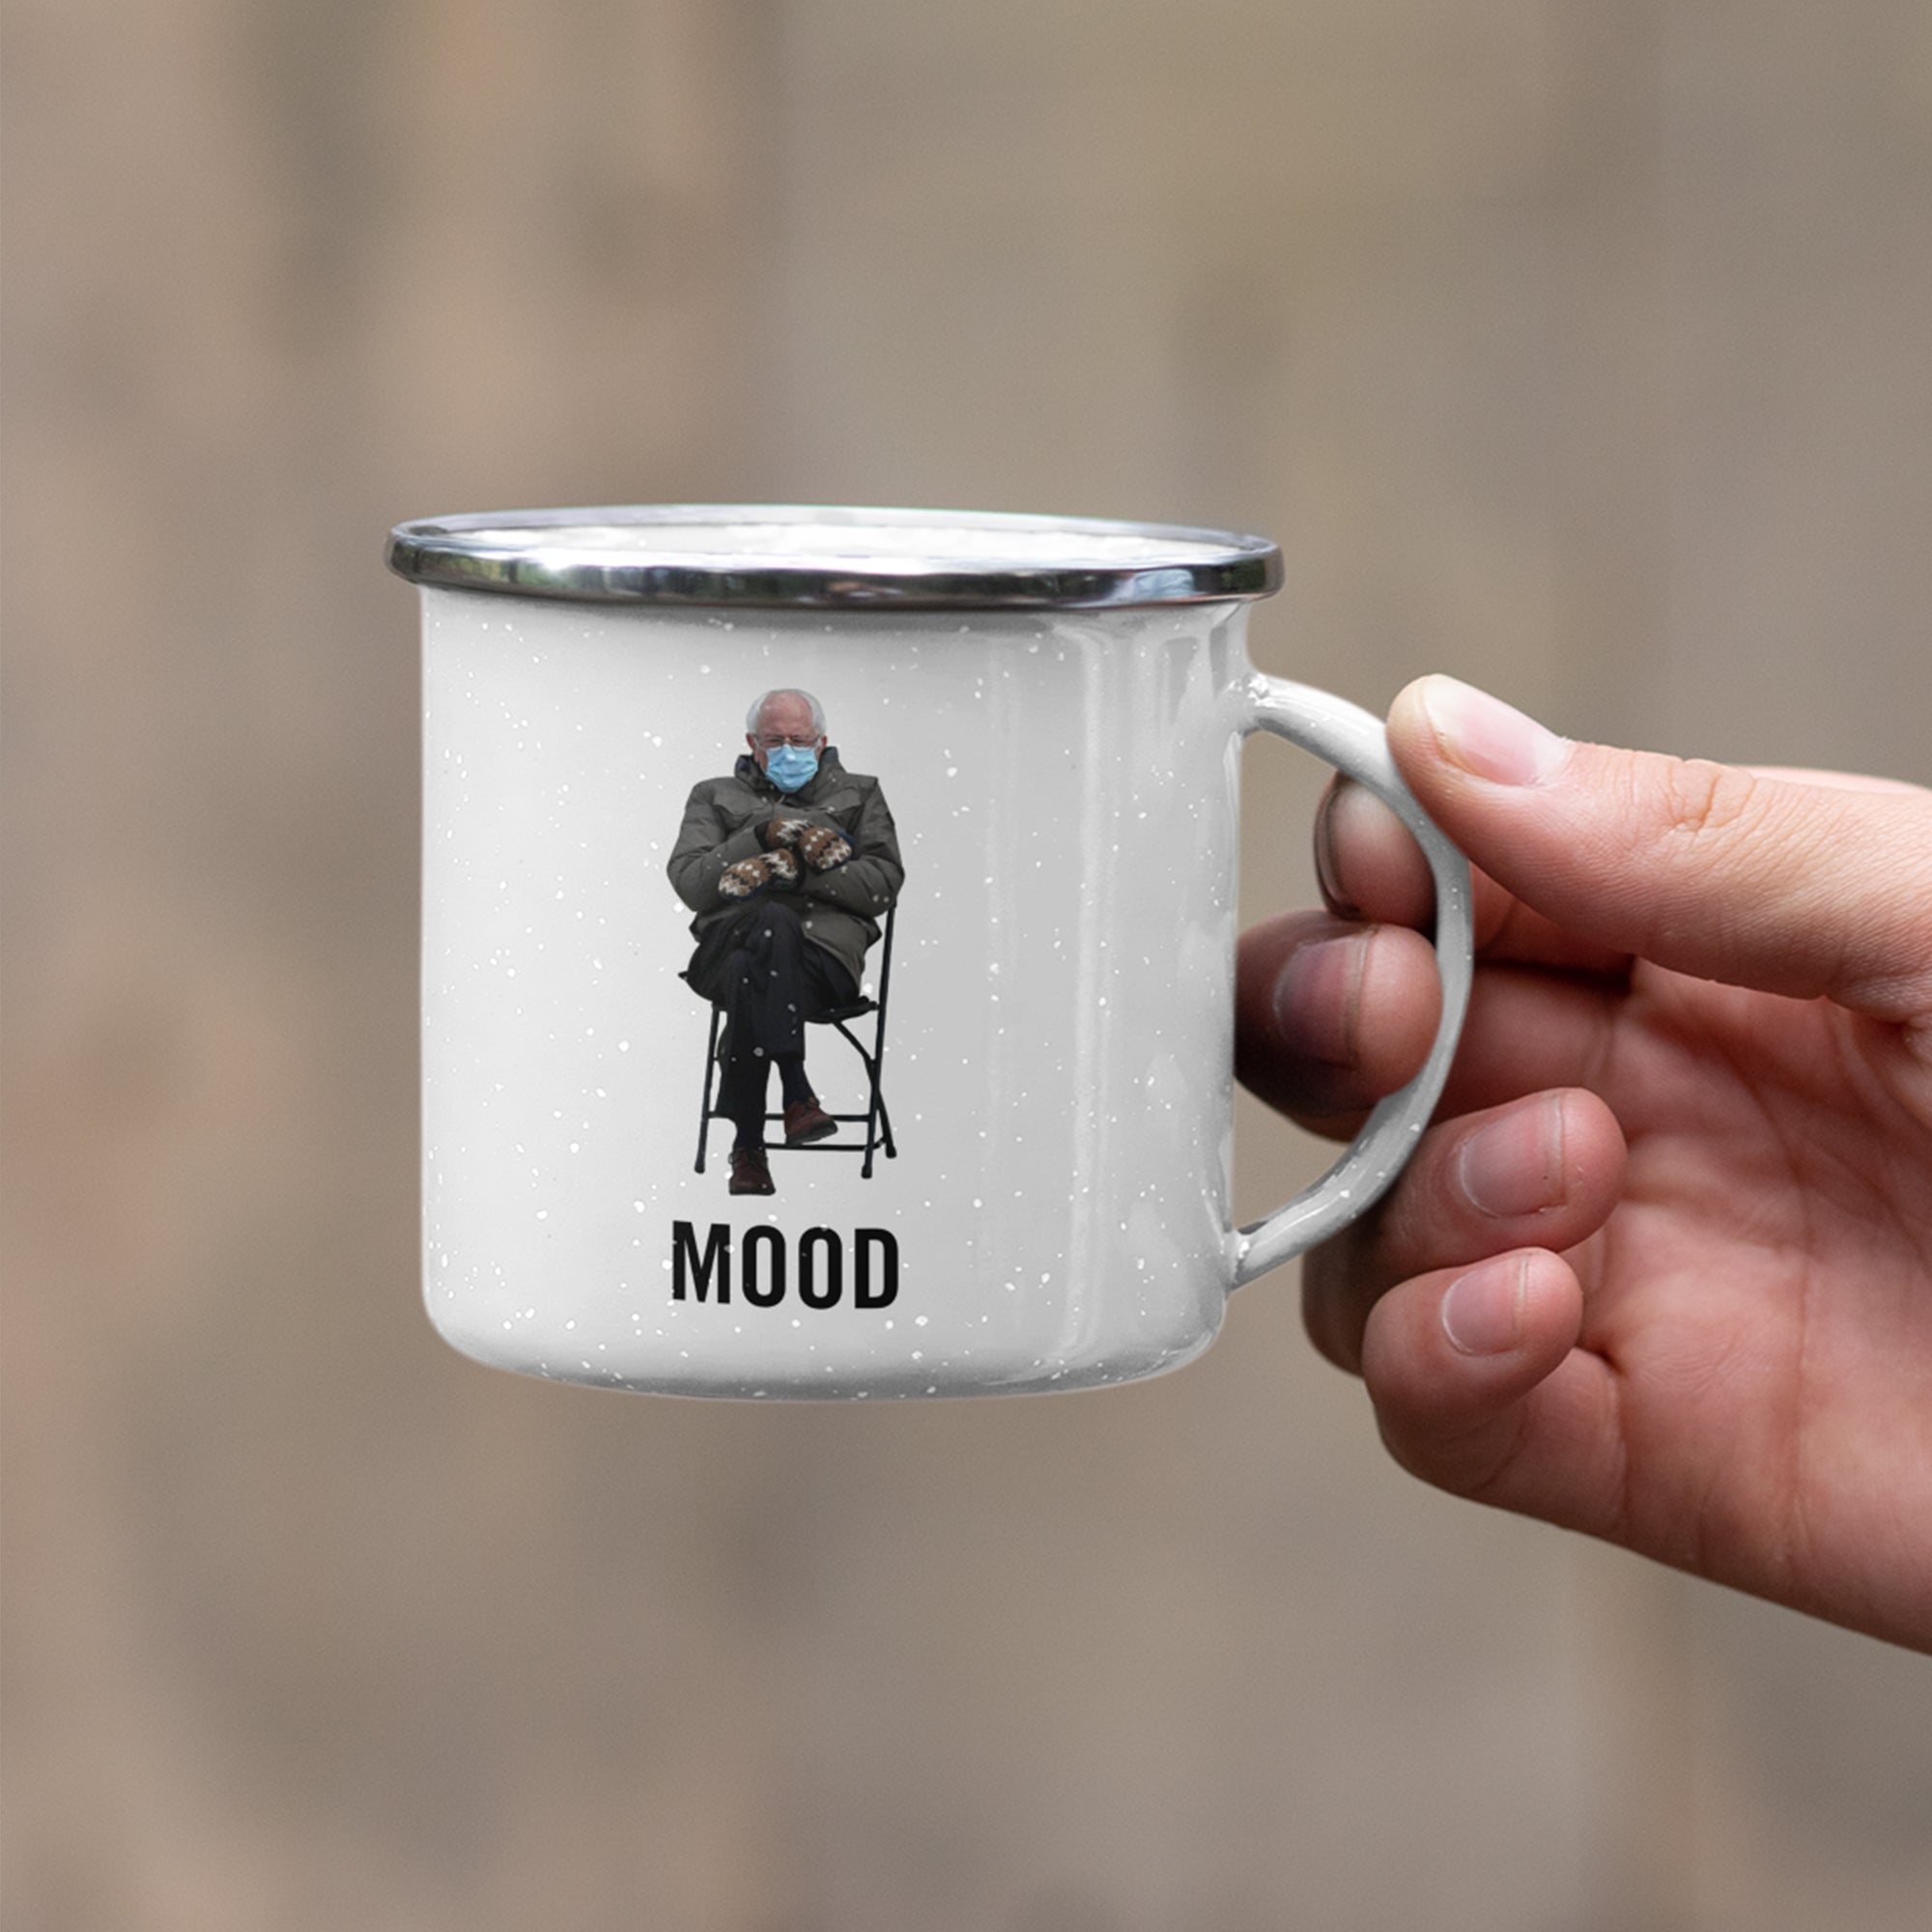 Bernie Sanders "Current Mood" Camping Mug - Funny Mug For Him Or Her.